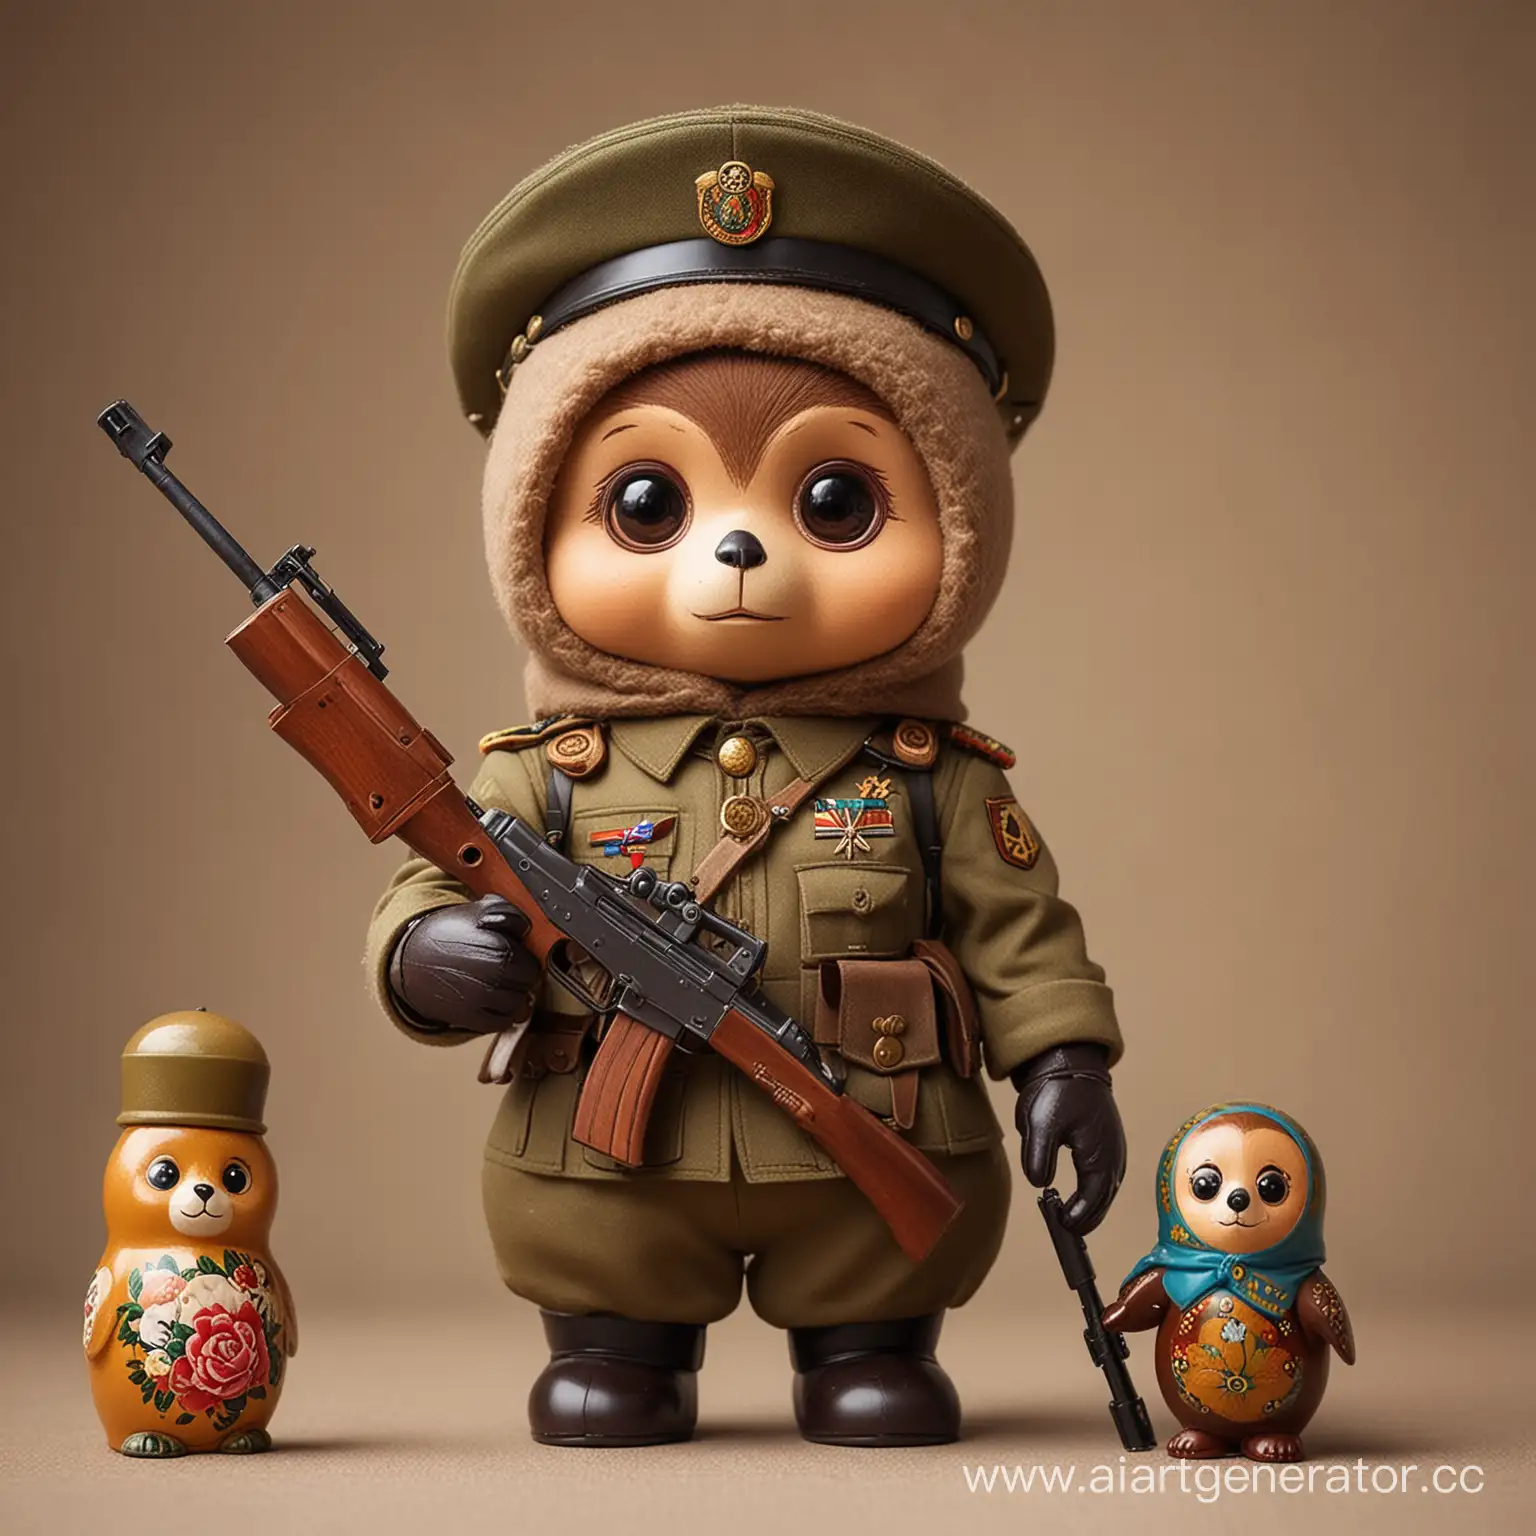 Cheburashka-with-Rifle-and-Matryoshka-Doll-in-Military-Uniform